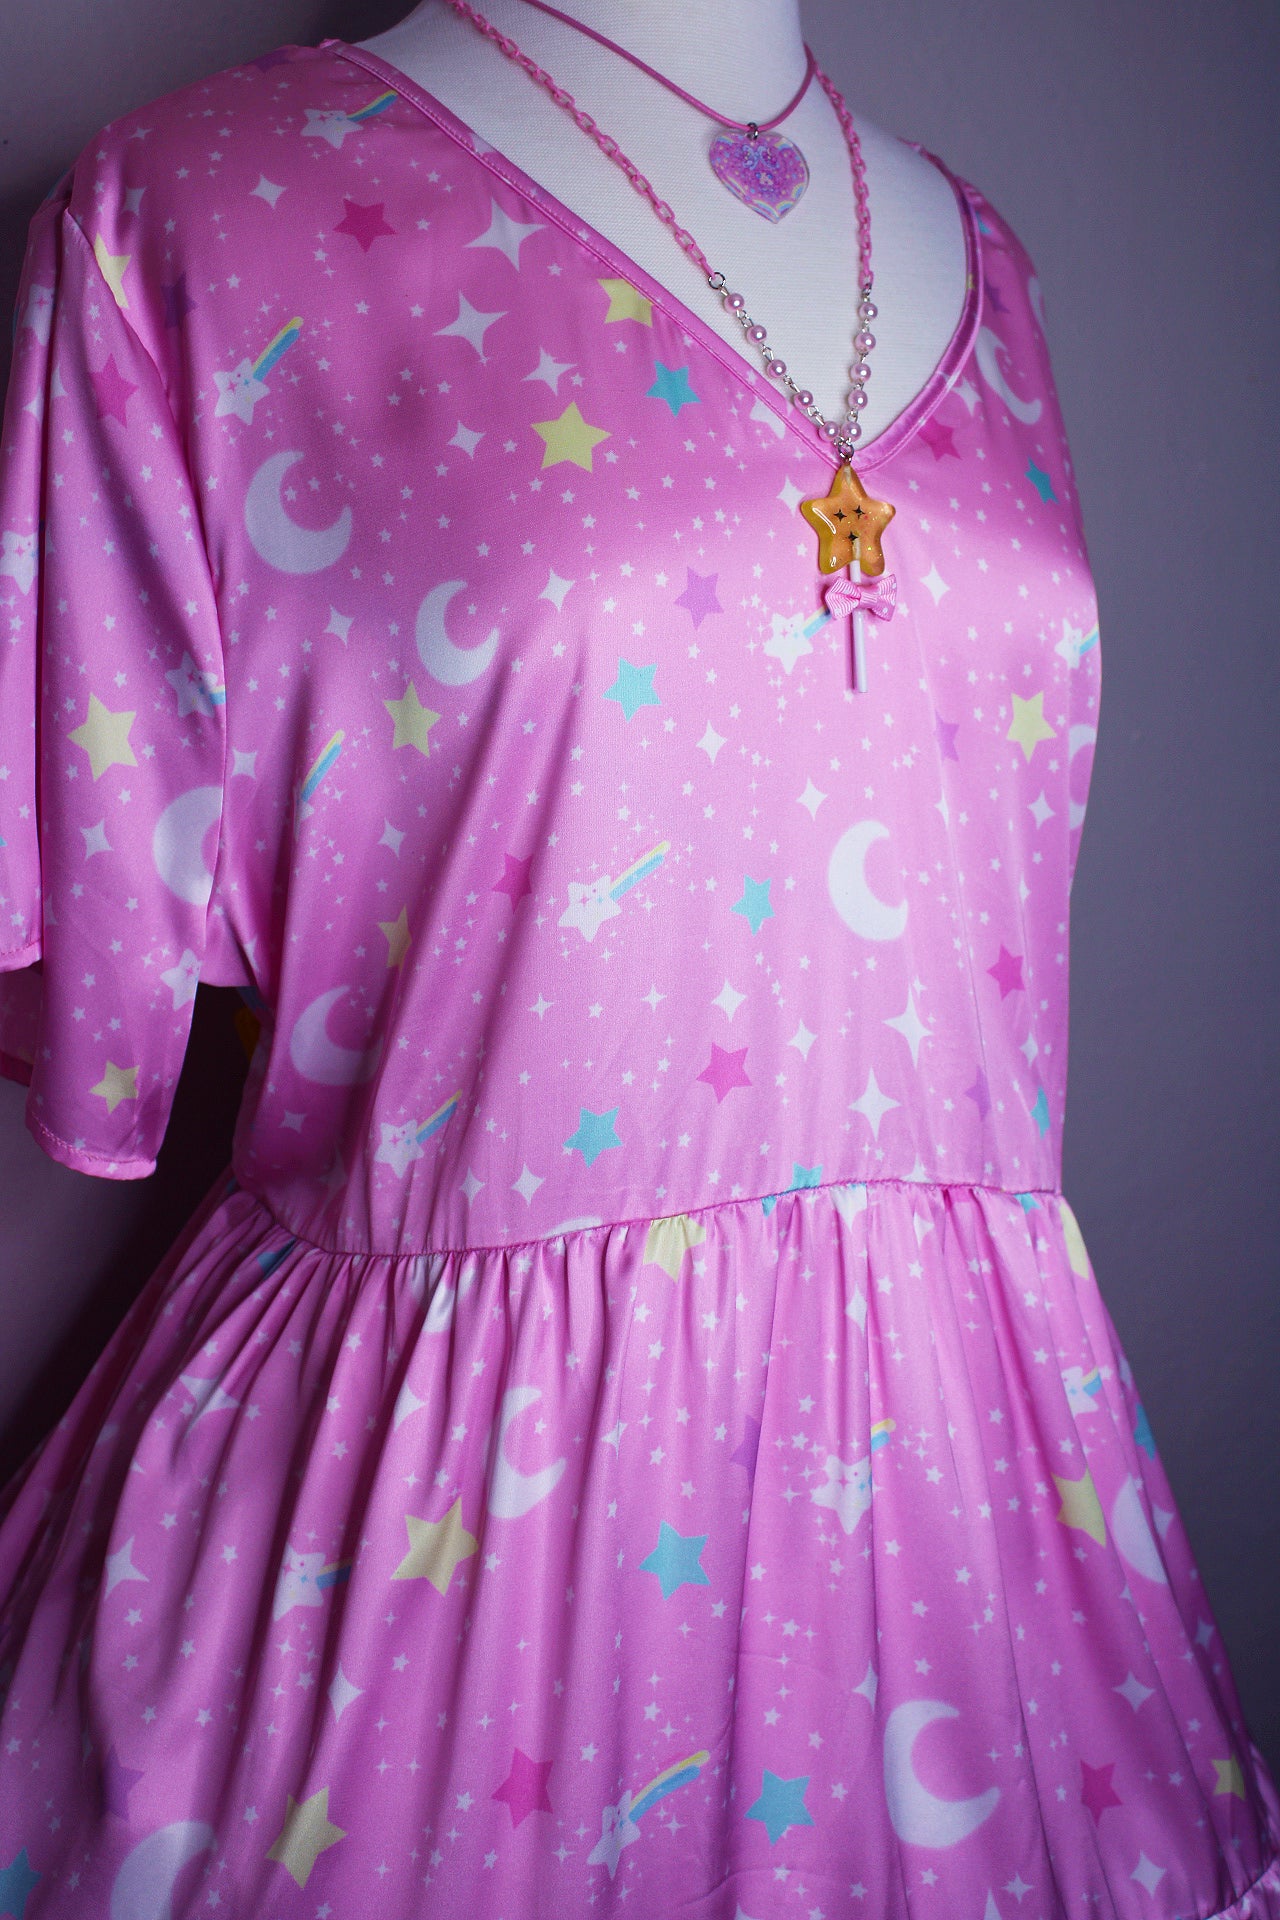 Starry Glitter Pink Tiered Short Sleeve Babydoll Dress